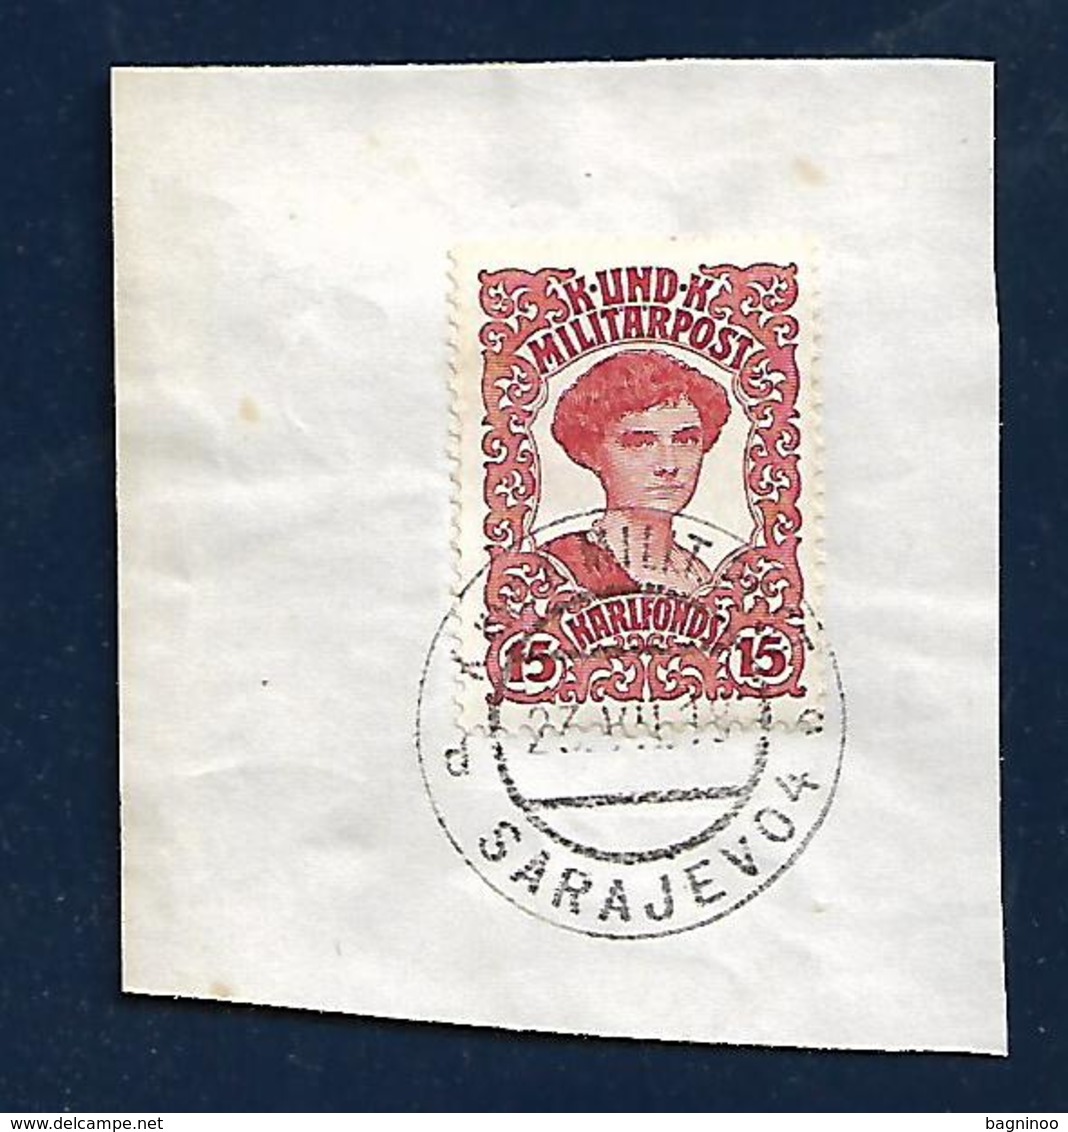 AUSTRIA Occupation Of Bosnia And Herzegovina KUK Militar Post With Stamp Sarajevo 23.VII 1918 - Used Stamps